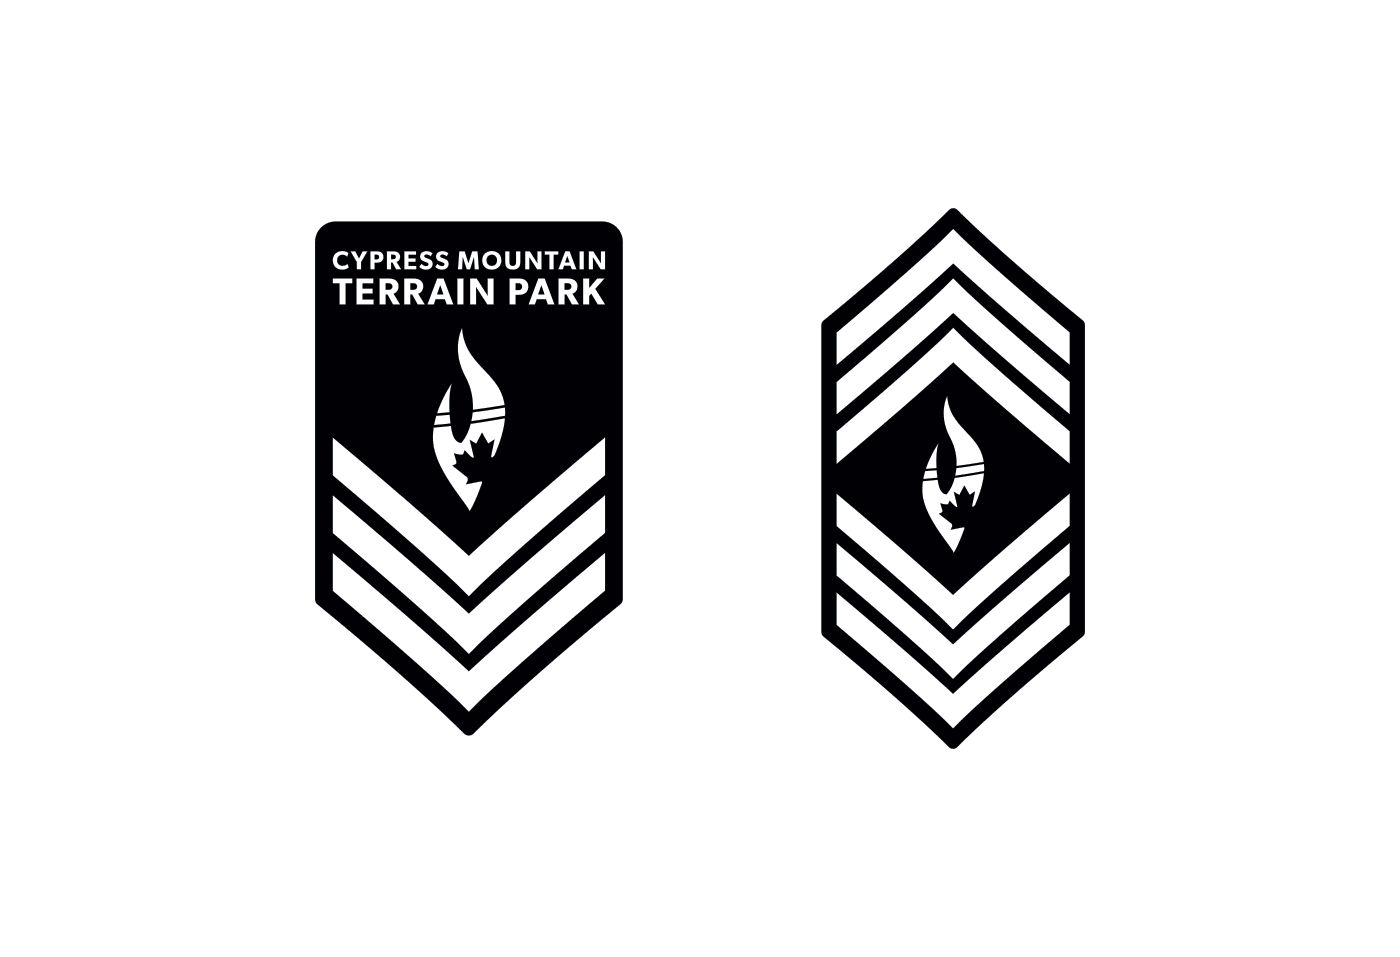 Cypress Terrain Parks alternative logos and badges.